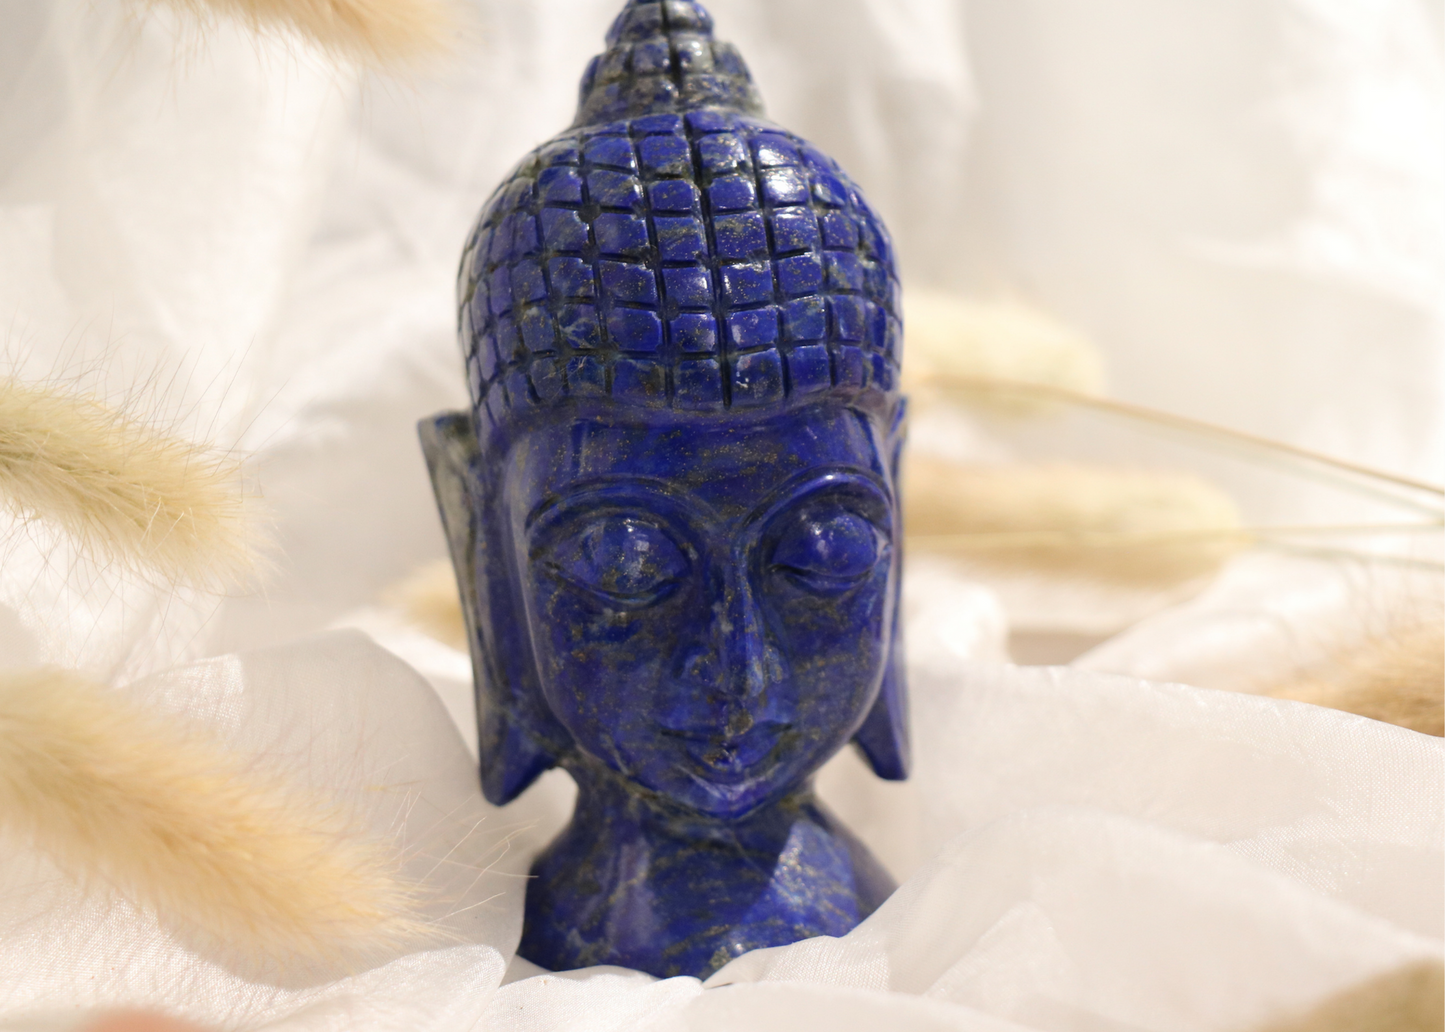 Buddha Head - Lapis Lazuli (11cm)